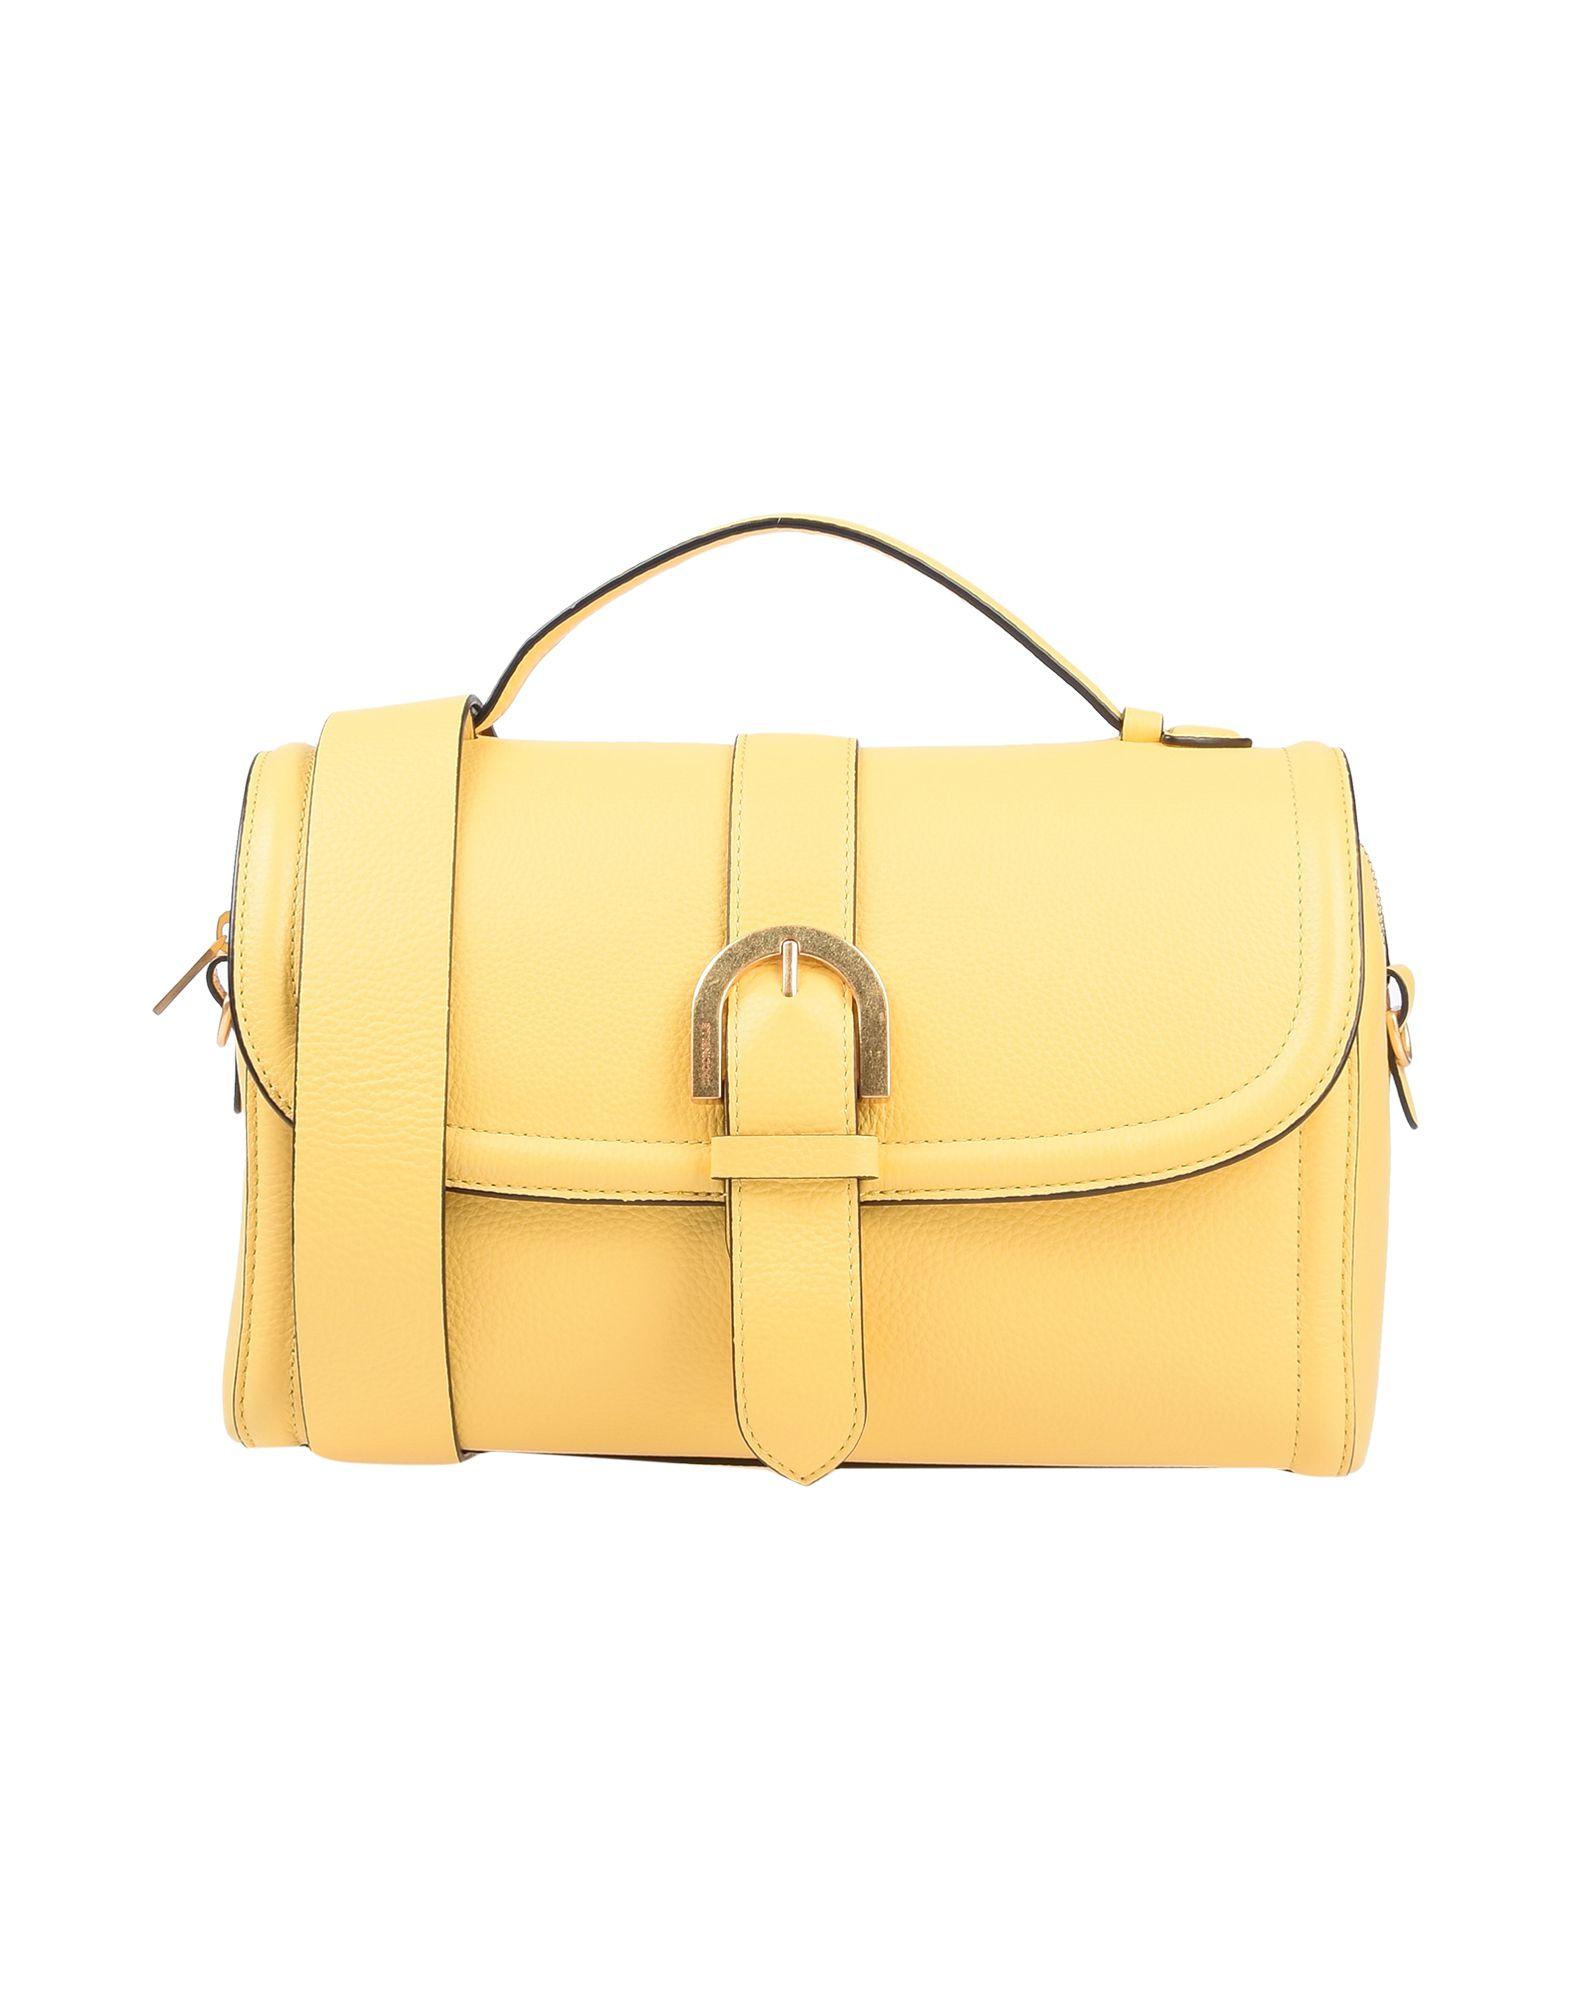 Coccinelle Handbag in Yellow - Lyst